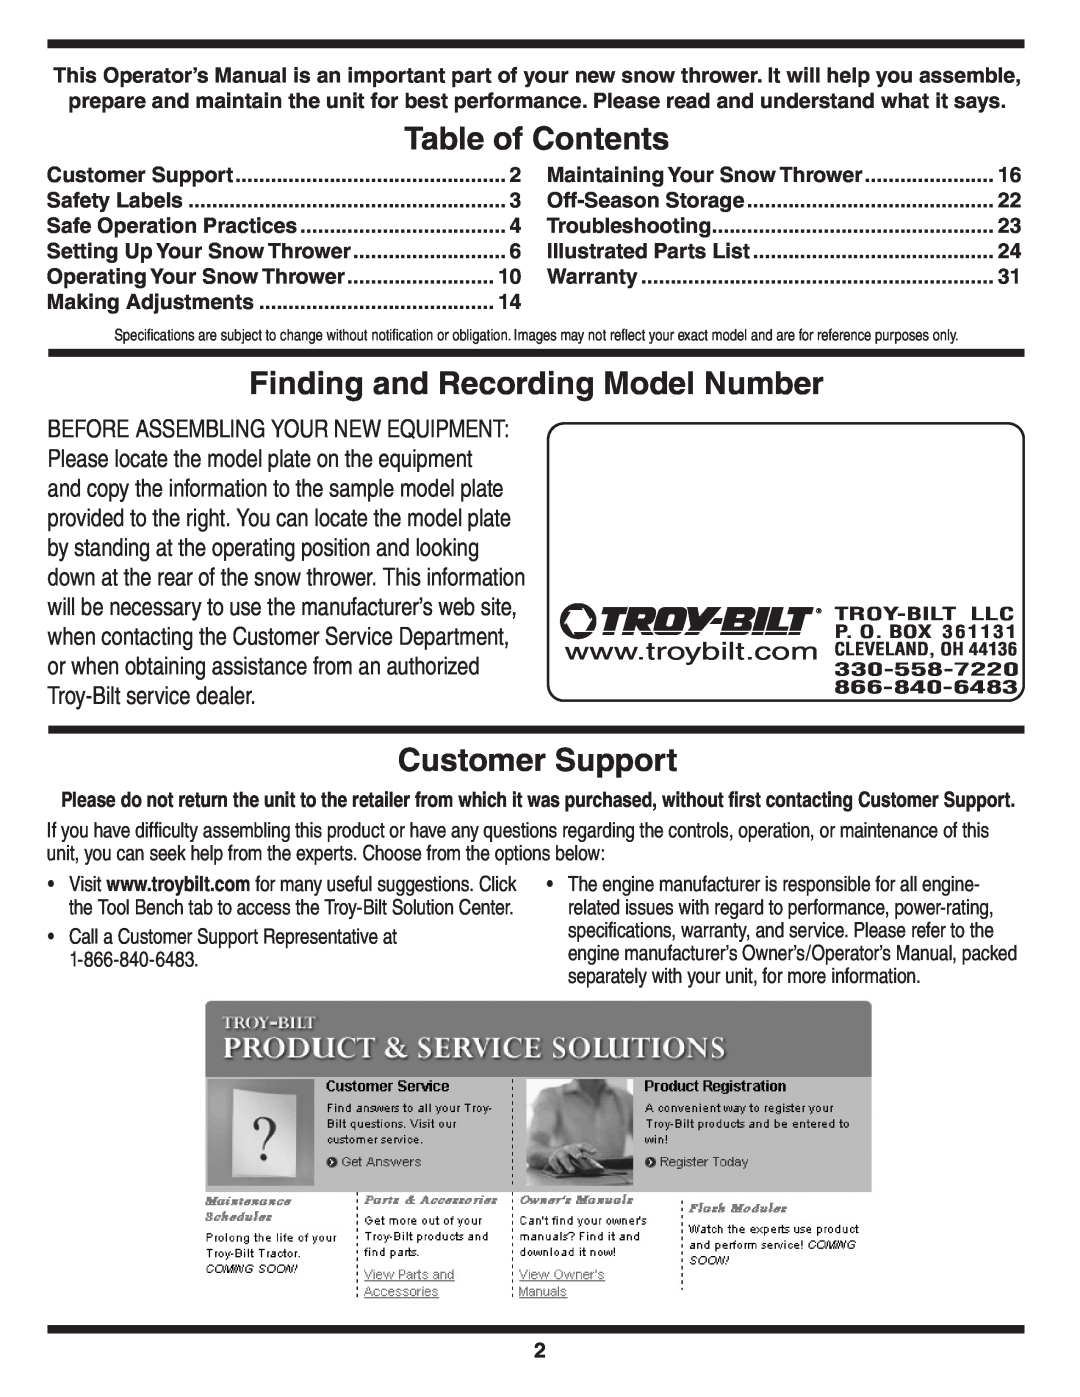 Troy-Bilt 31AH9Q77766 Table of Contents, Finding and Recording Model Number, Customer Support, Troy-Bilt service dealer 